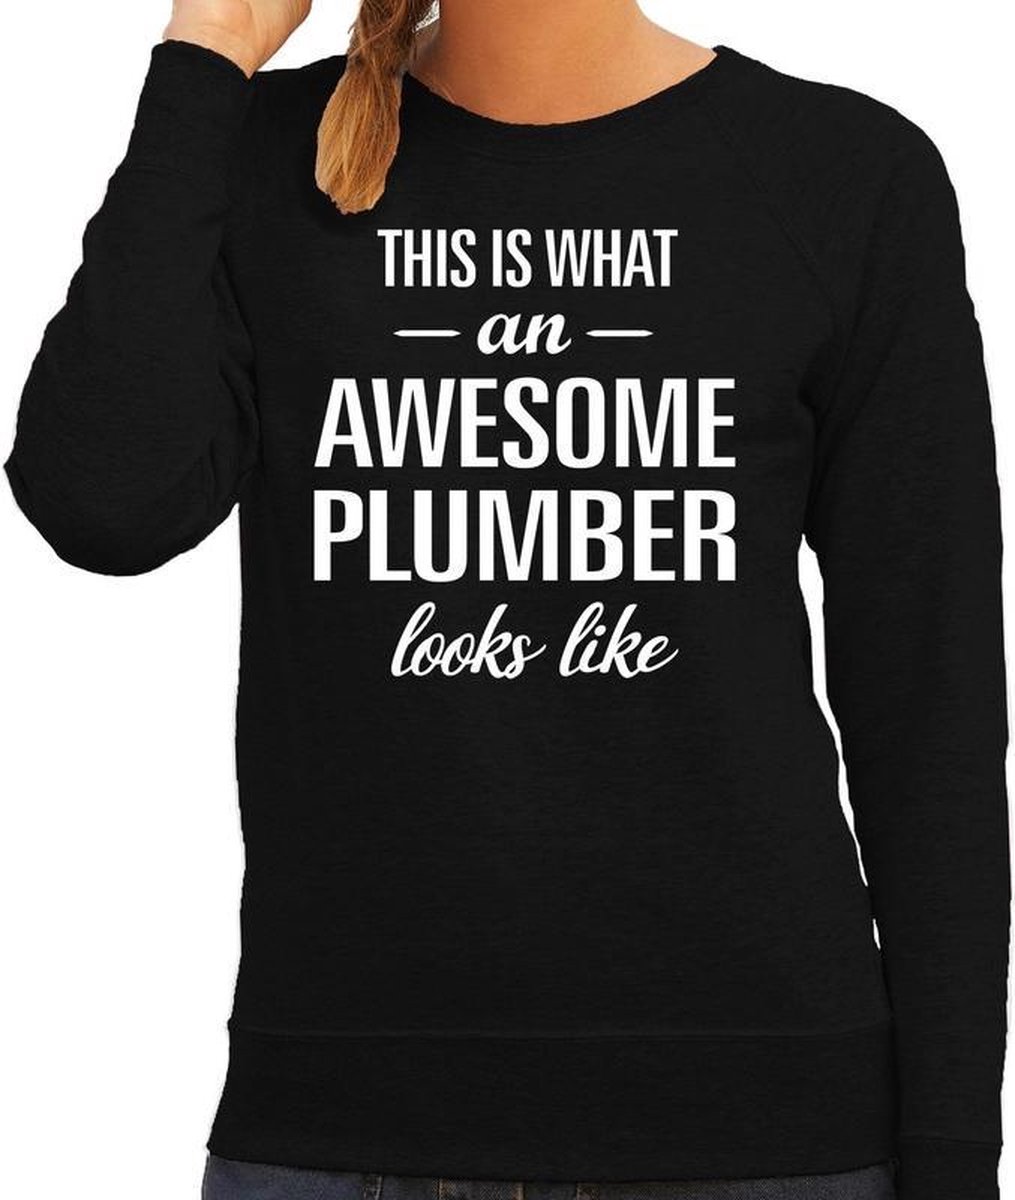 Awesome plumber - geweldige loodgieter cadeau t-shirt zwart dames - beroepen shirts / Moederdag / verjaardag cadeau XS - Bellatio Decorations